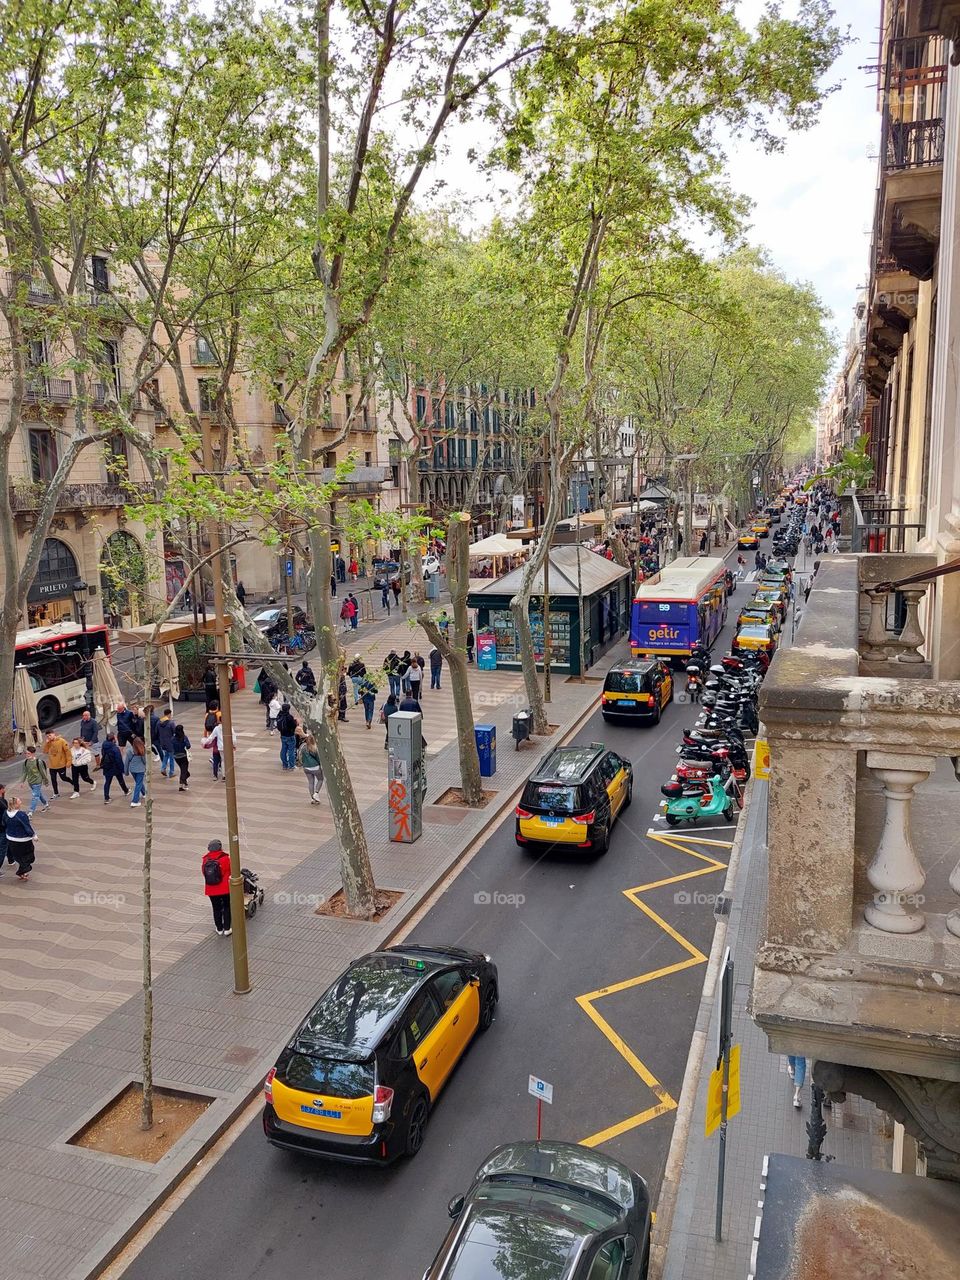 Barcelona taxis